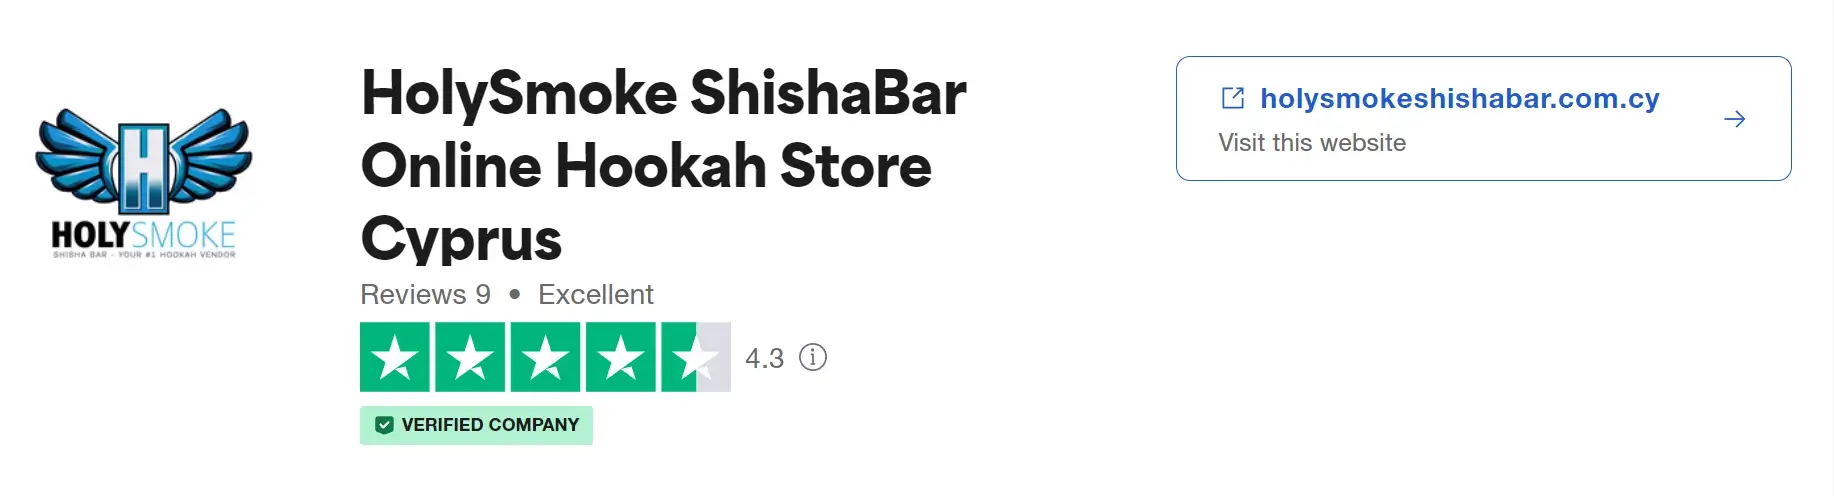 TRUSTPILOT Reviews of Holysmoke Shishabar Store